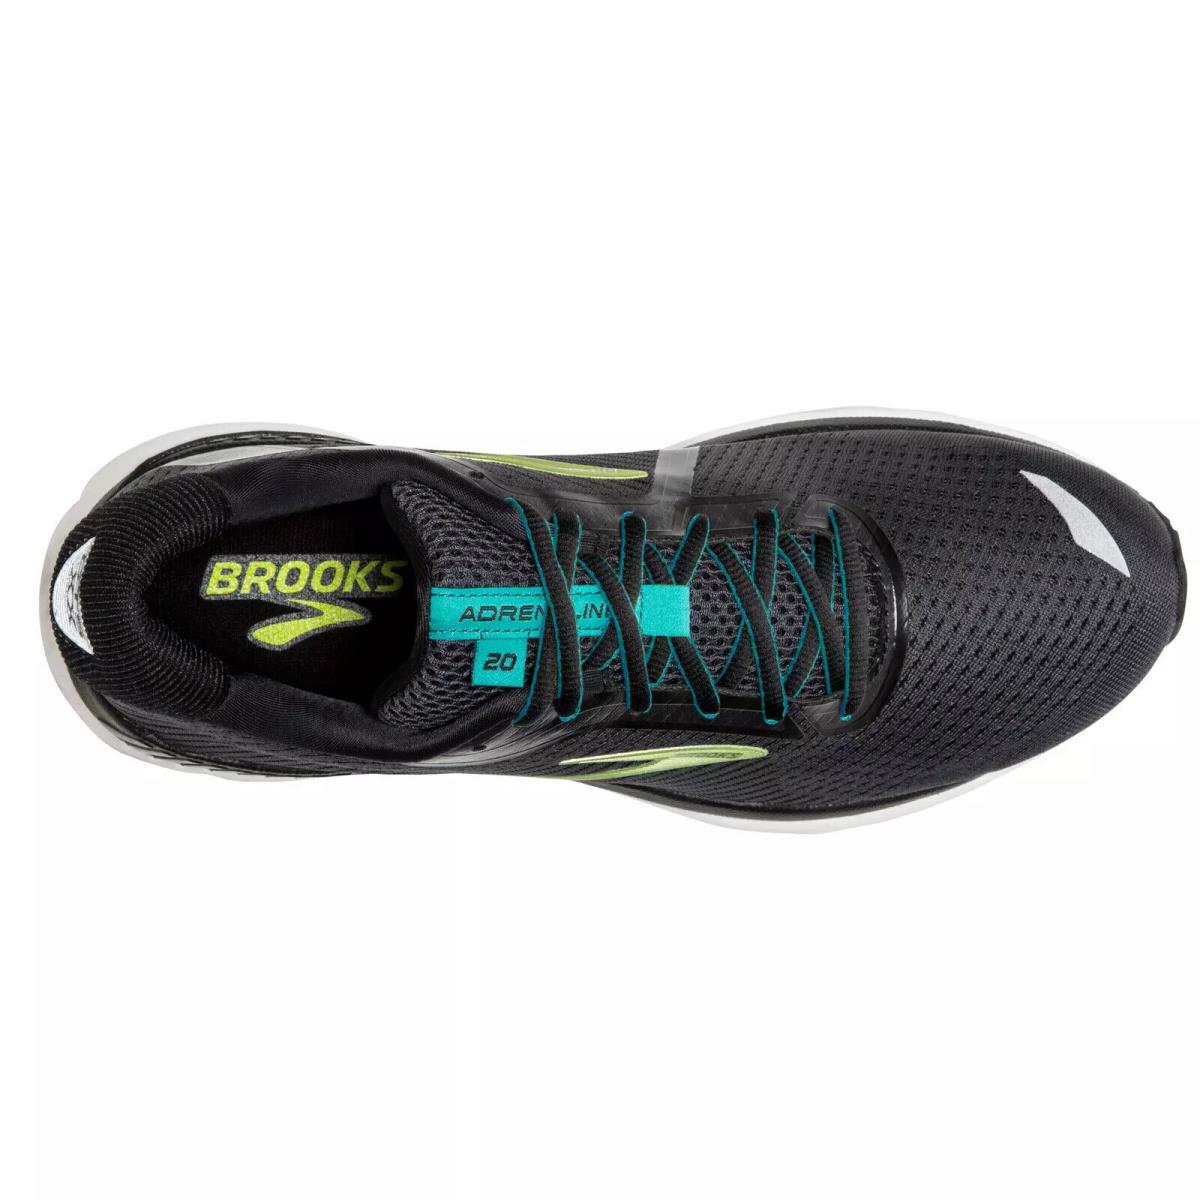 Brooks shoes Adrenaline GTS - Black/Lime/Blue 3